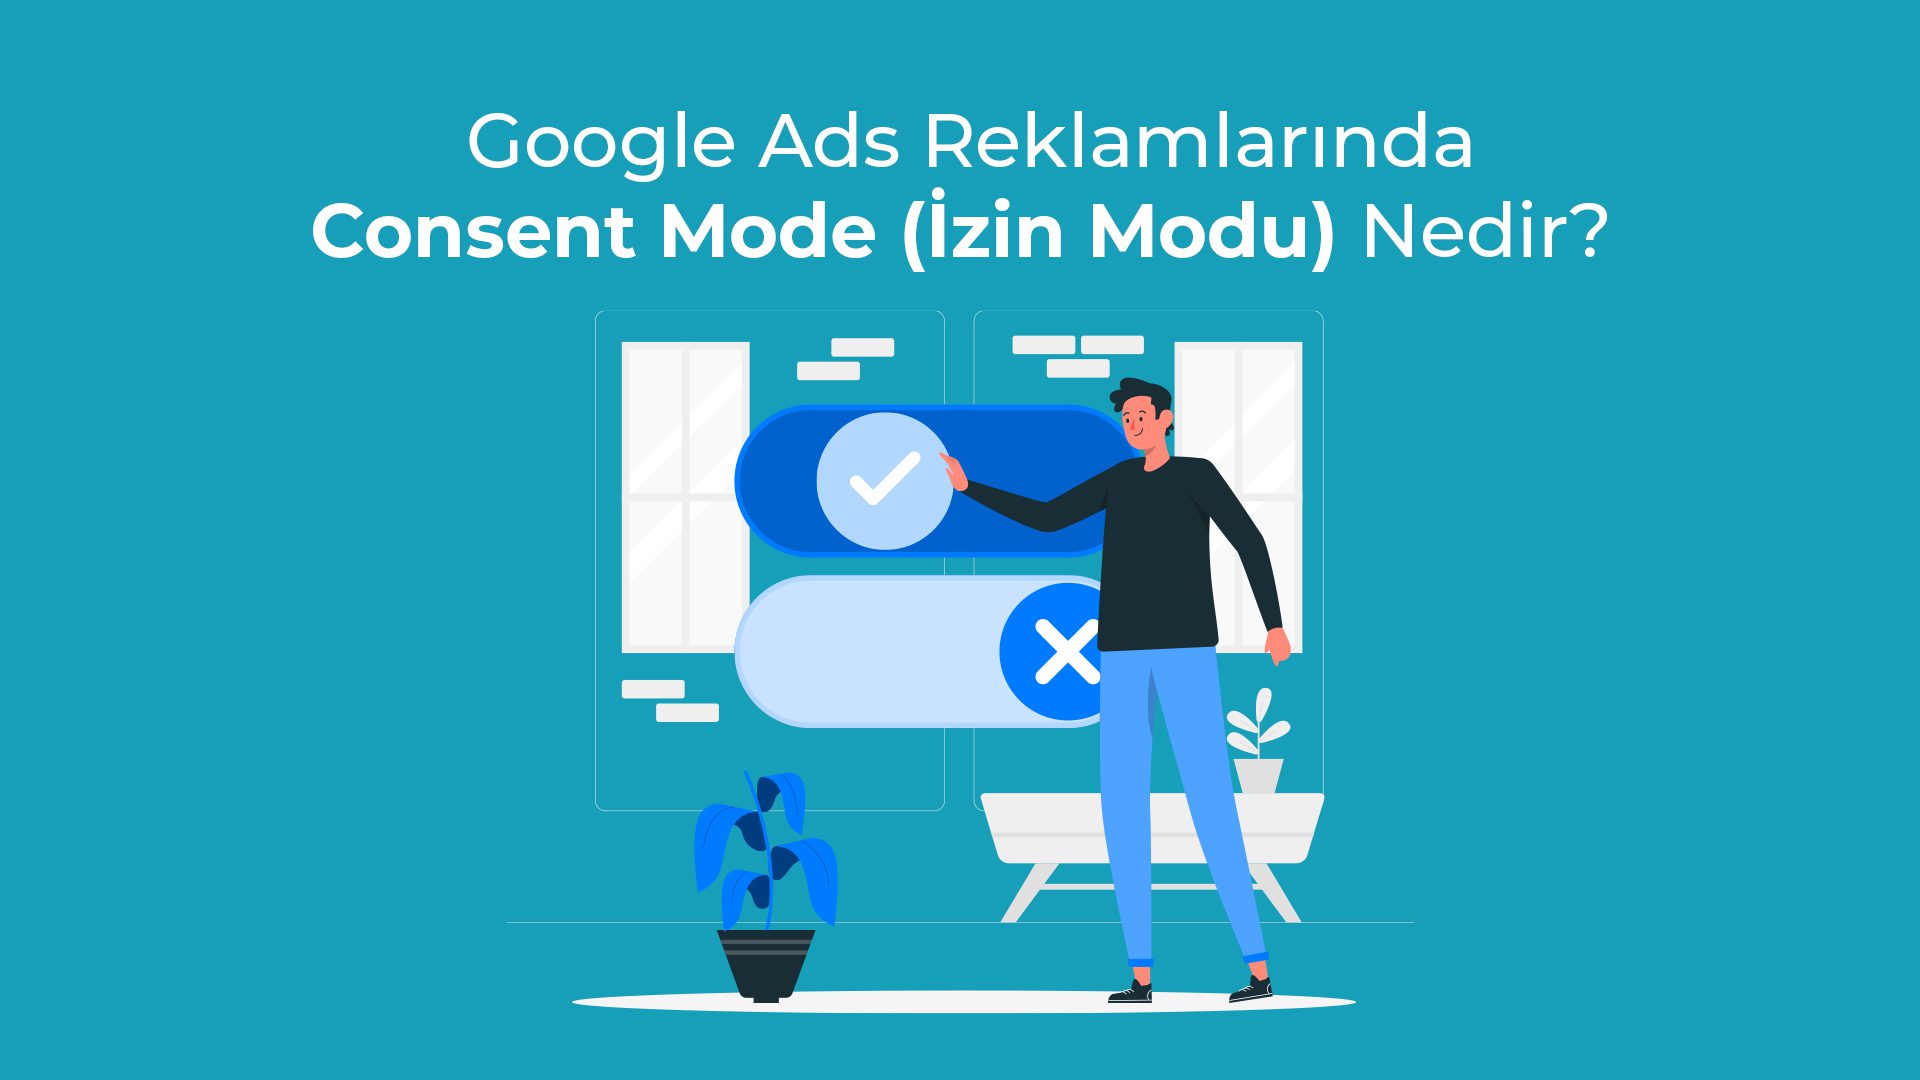 Google Ads Reklamlarinda Consent Mode Izin Modu Nedir